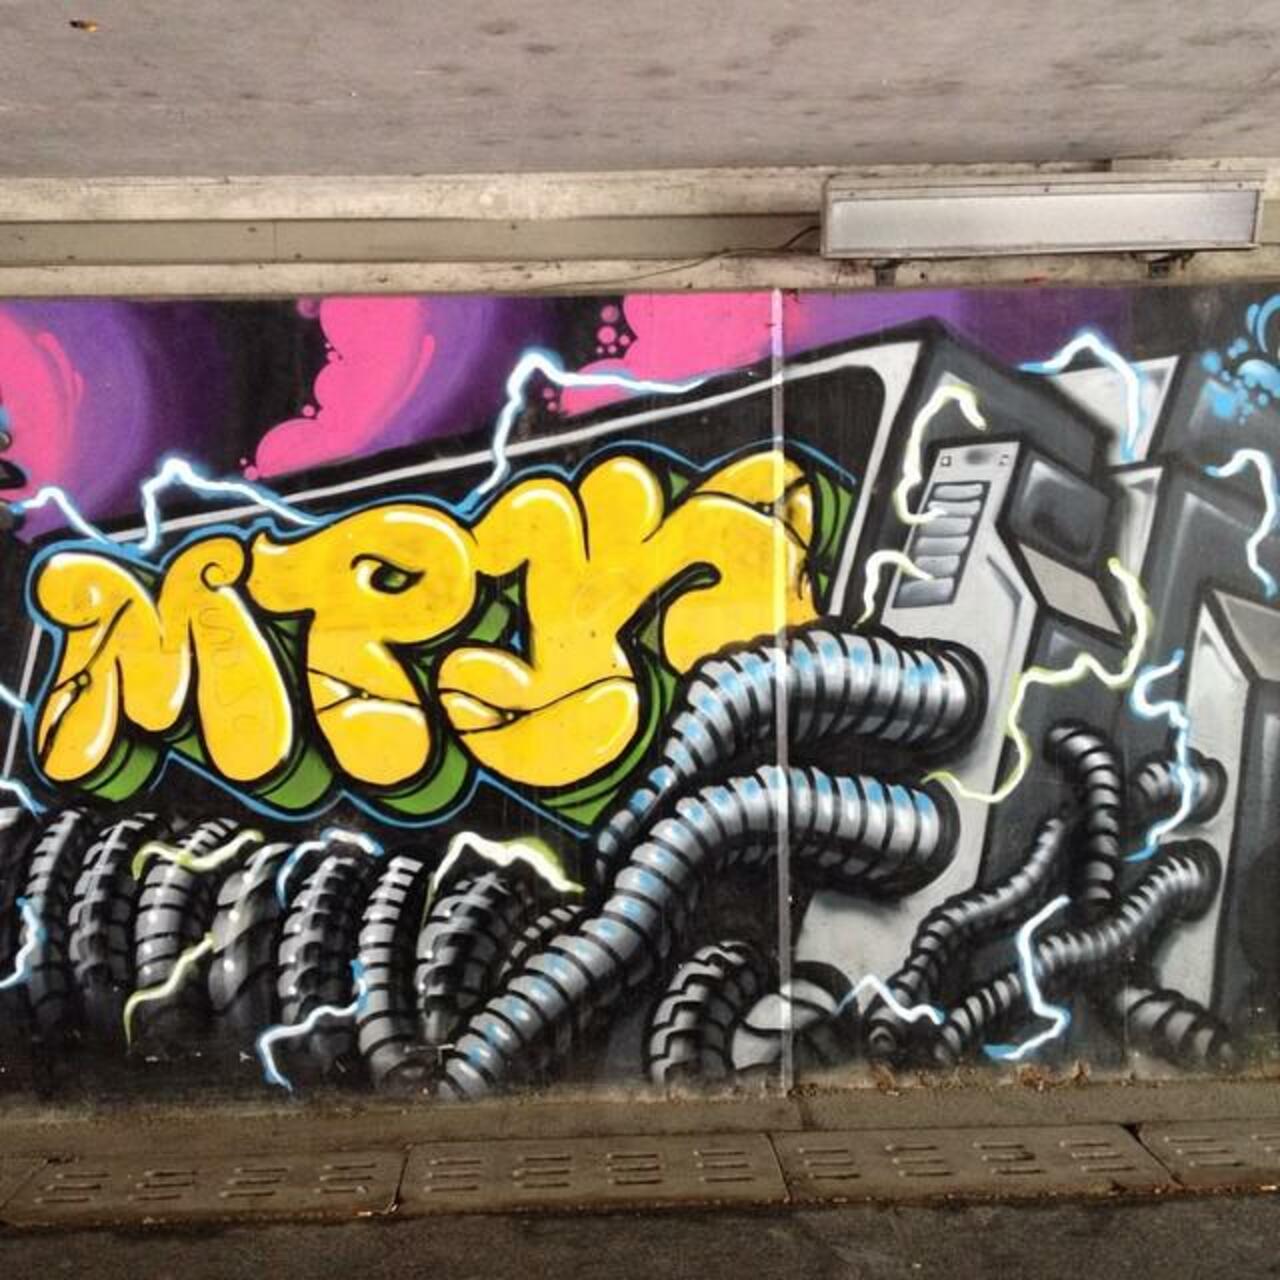 #graffiti #graffitti #urban #urbanart #urbanstreetart #streetart #art #color #colour #city #vienna #wall #mural #de… http://t.co/tokX2jCboR